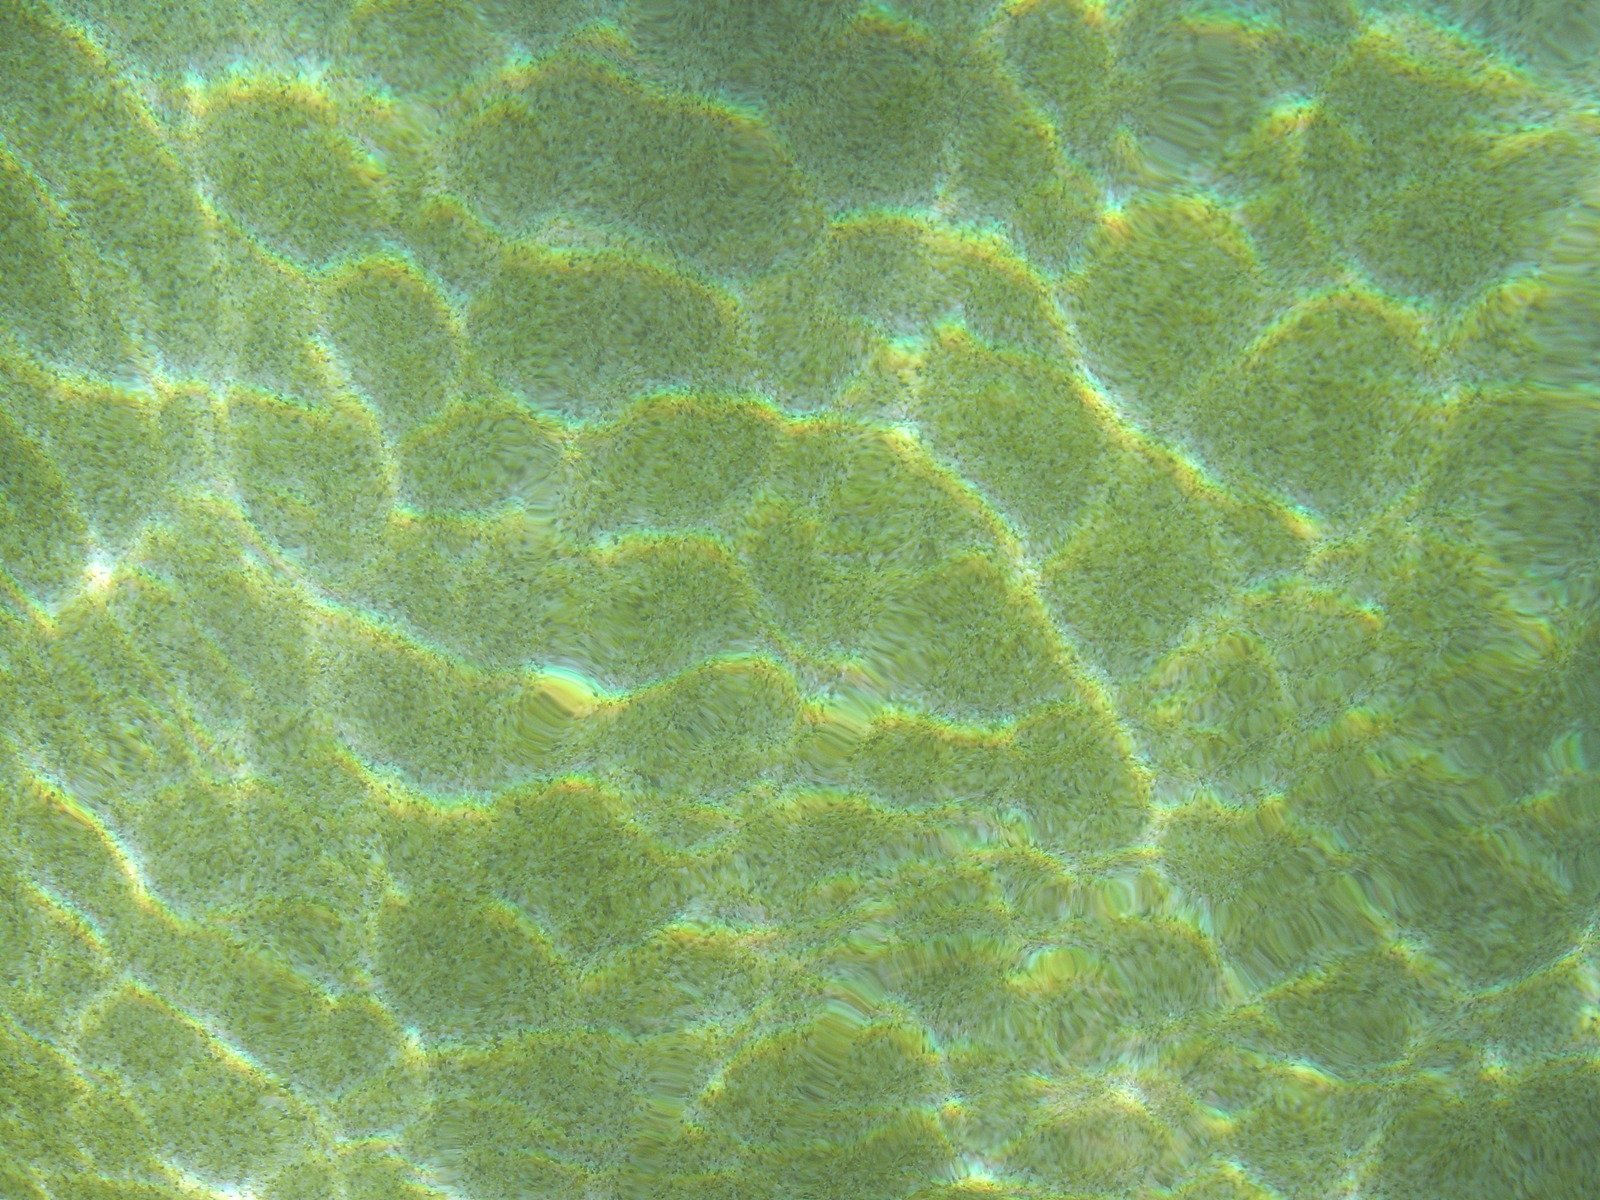 green algae floats in water, beneath a microscope lens